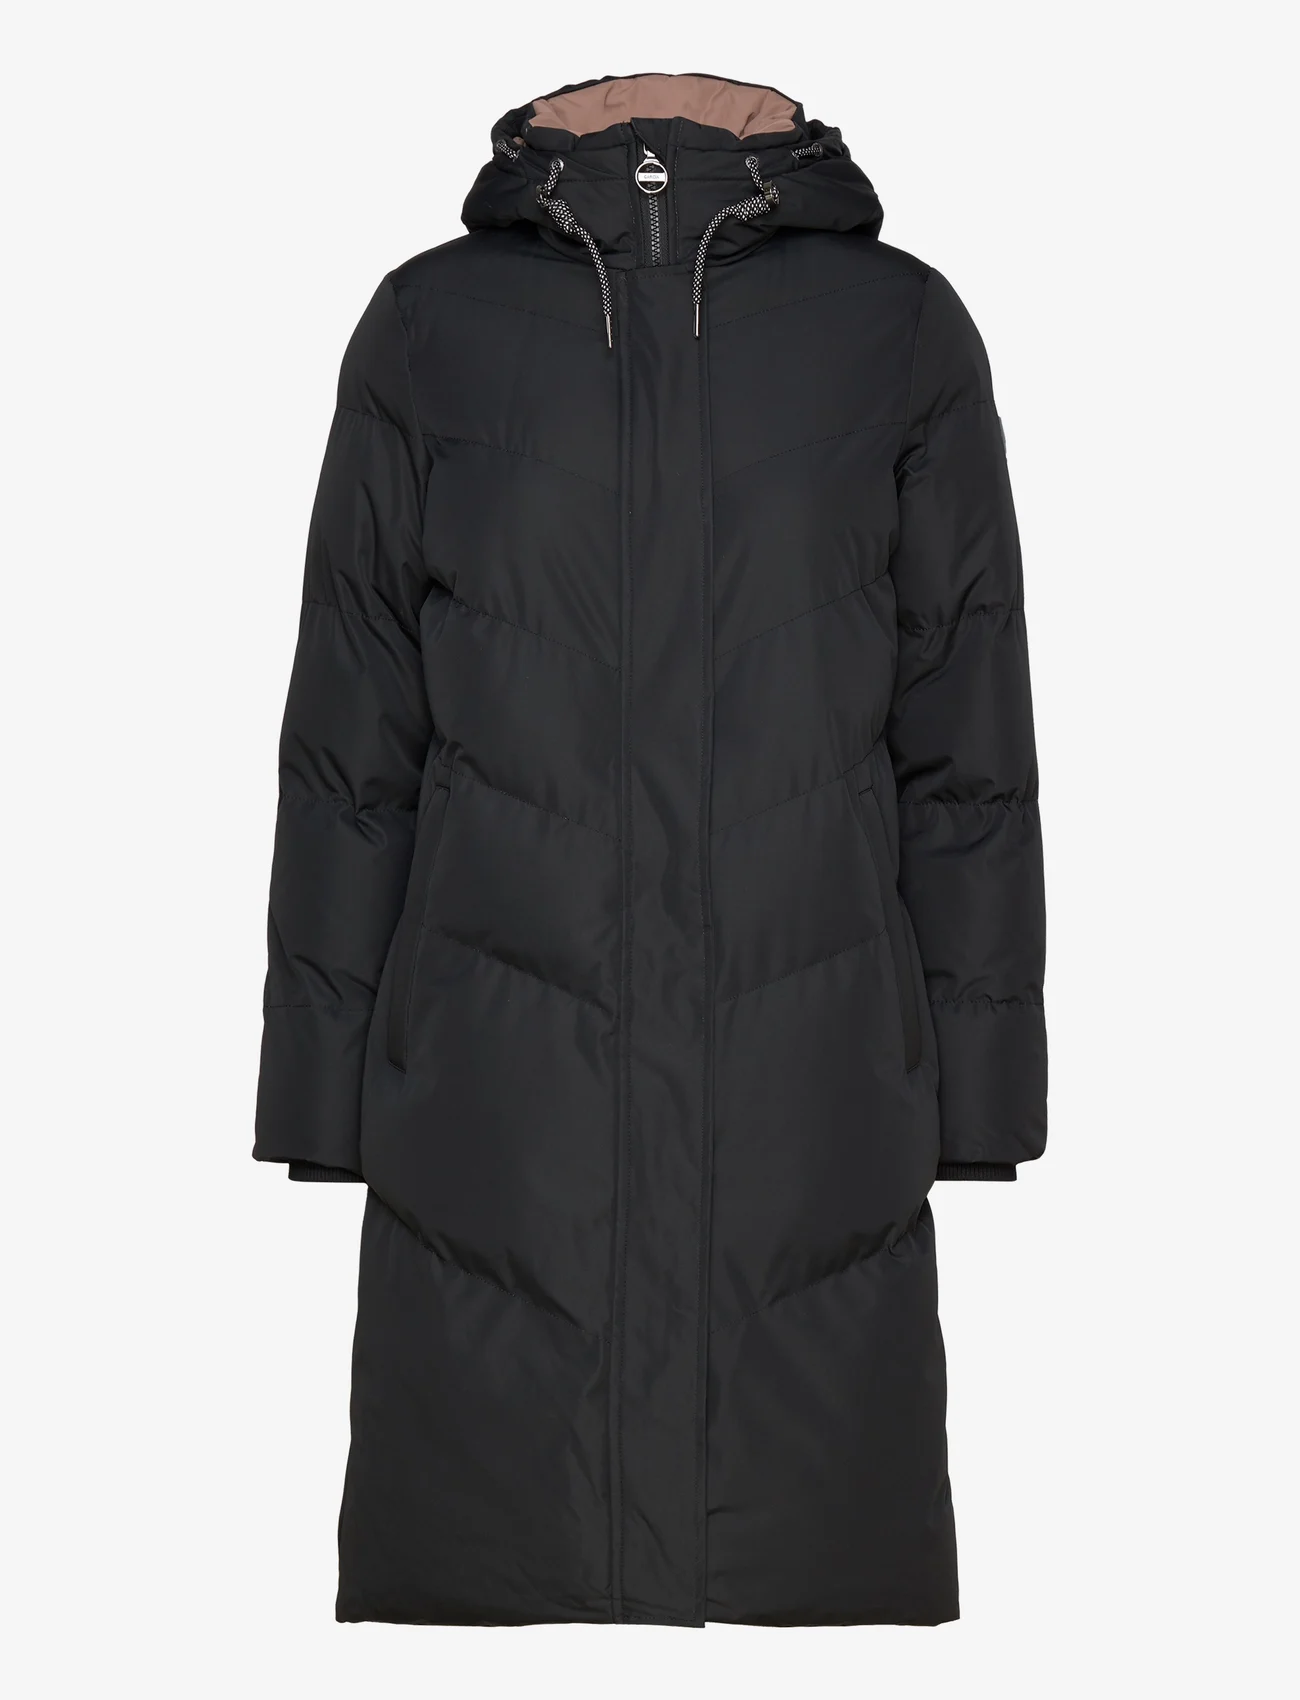 Garcia - ladies outdoor jackets - winterjacken - black - 0